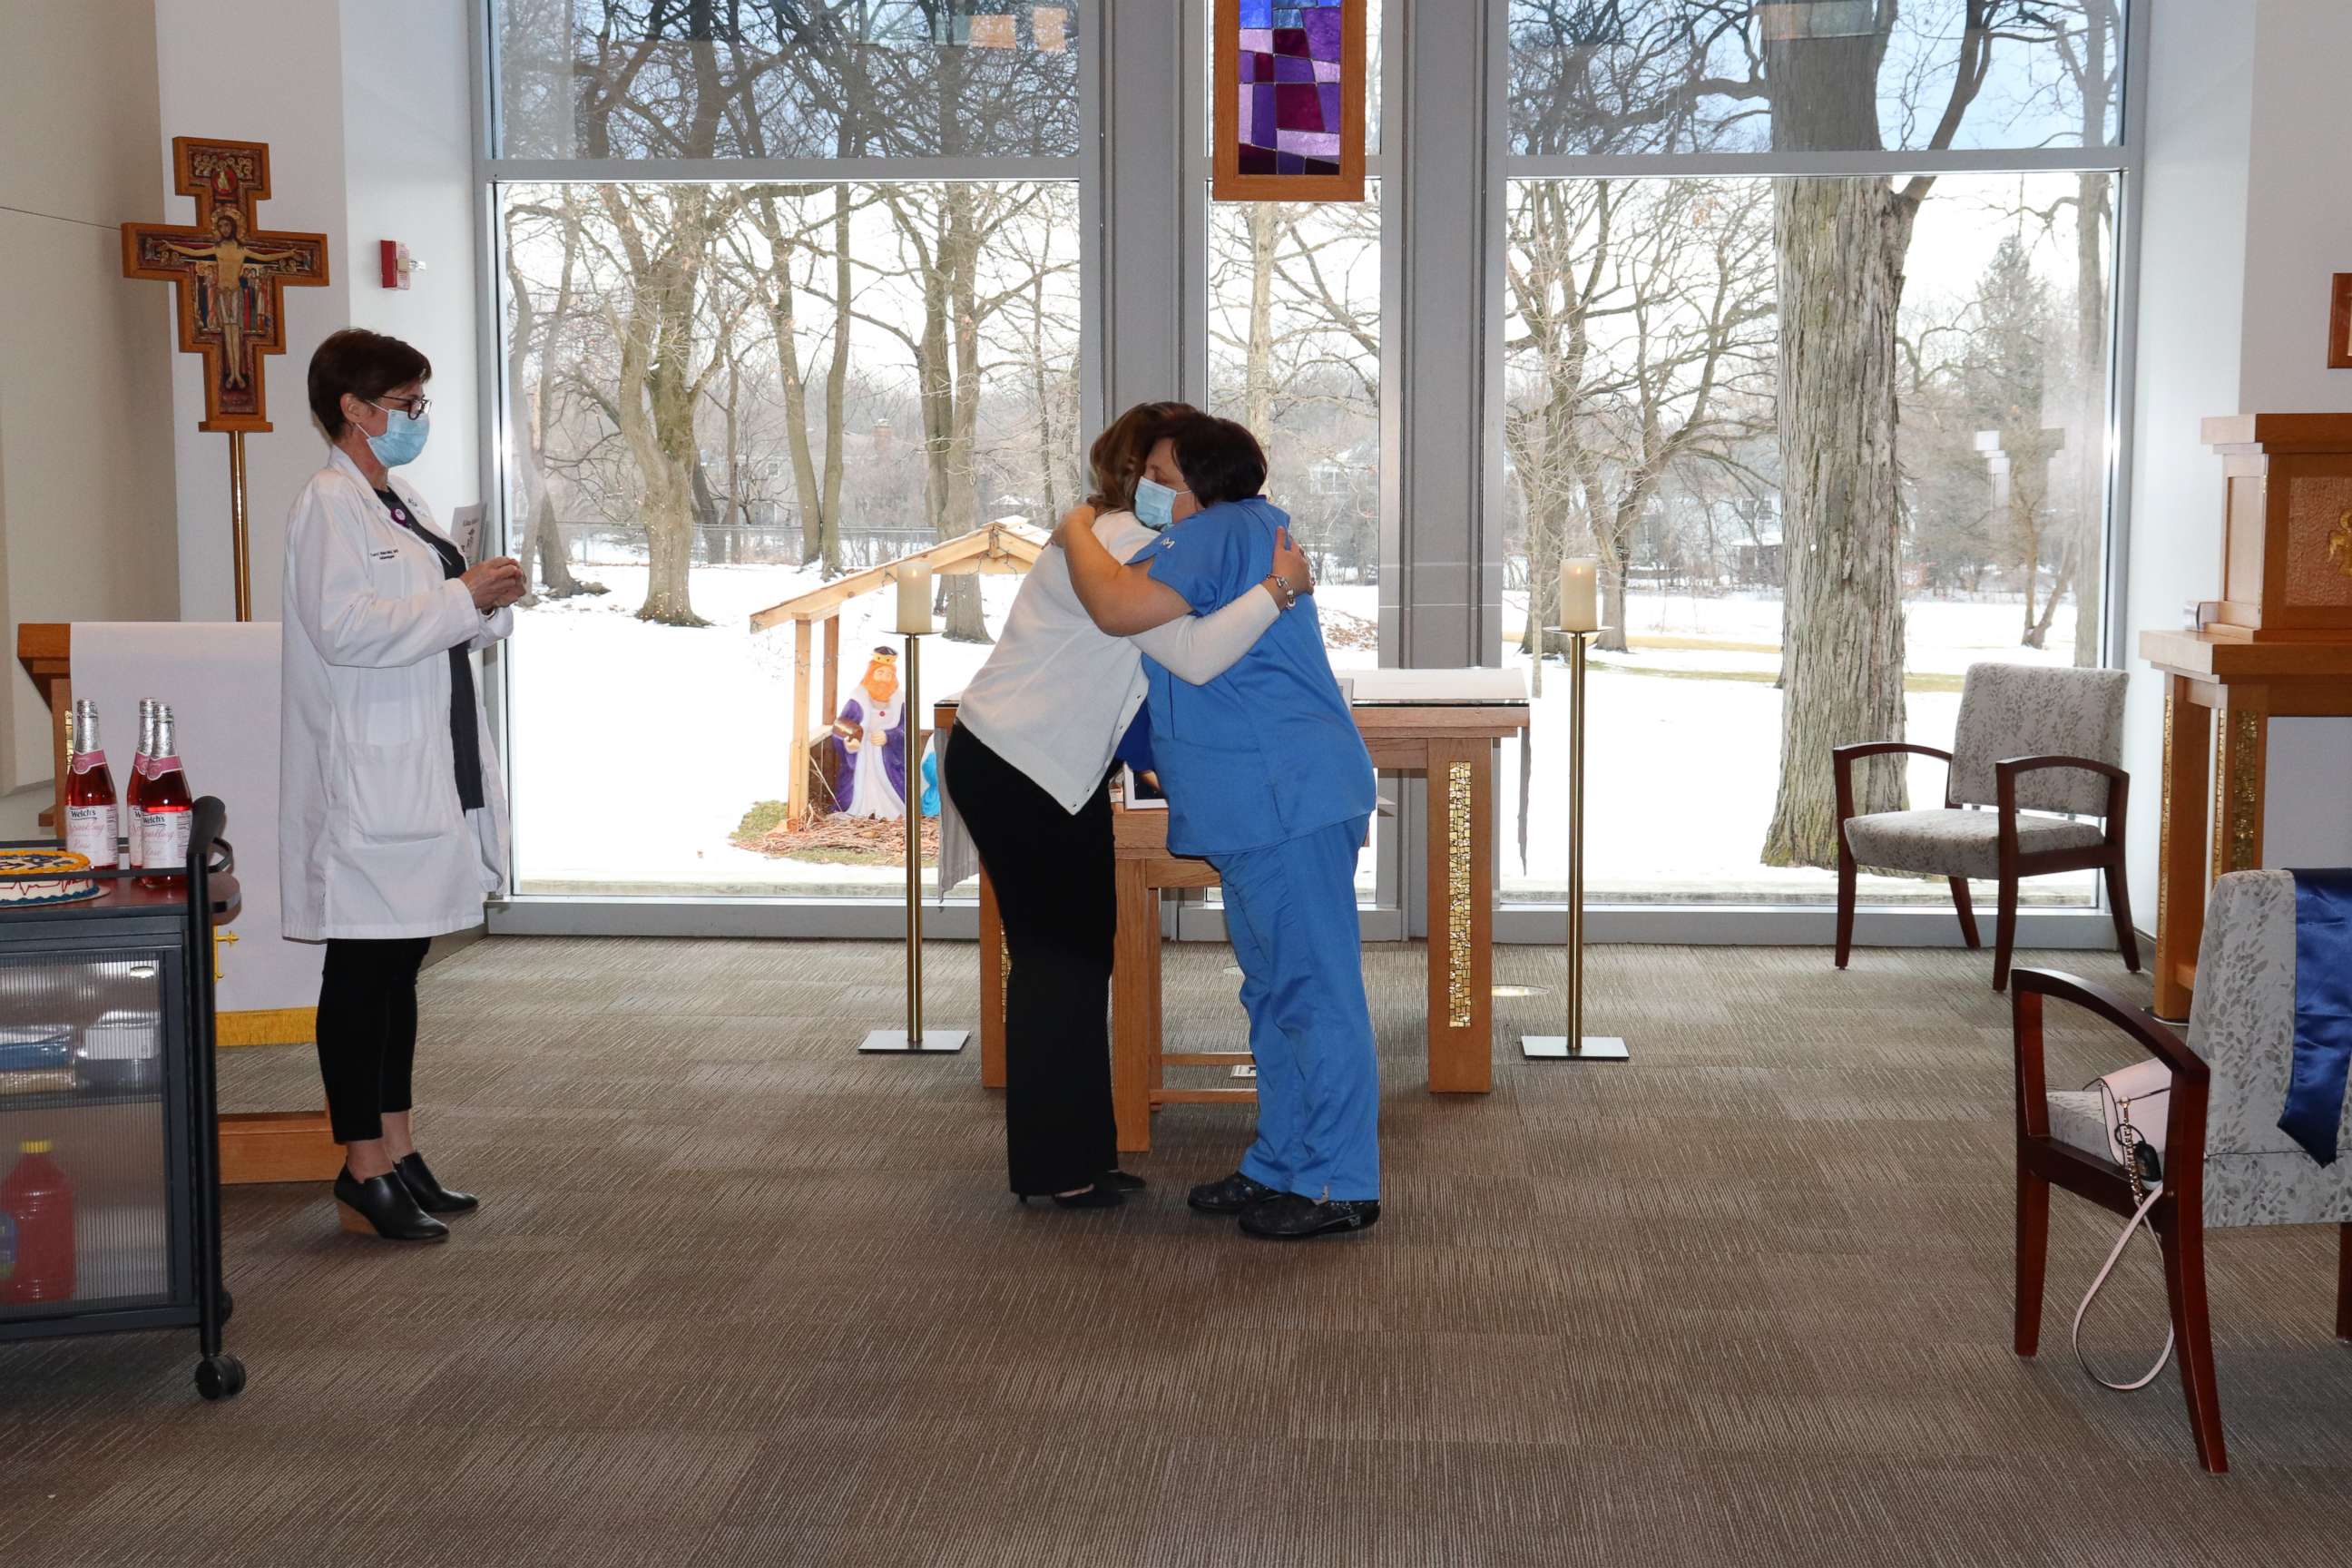 PHOTO: Edina Habibovic, 22, hugs Sanja Josipovic at her own pinning ceremony at Marianjoy Rehabilitation Hospital in DuPage County, Illinois, after graduating from nursing school.